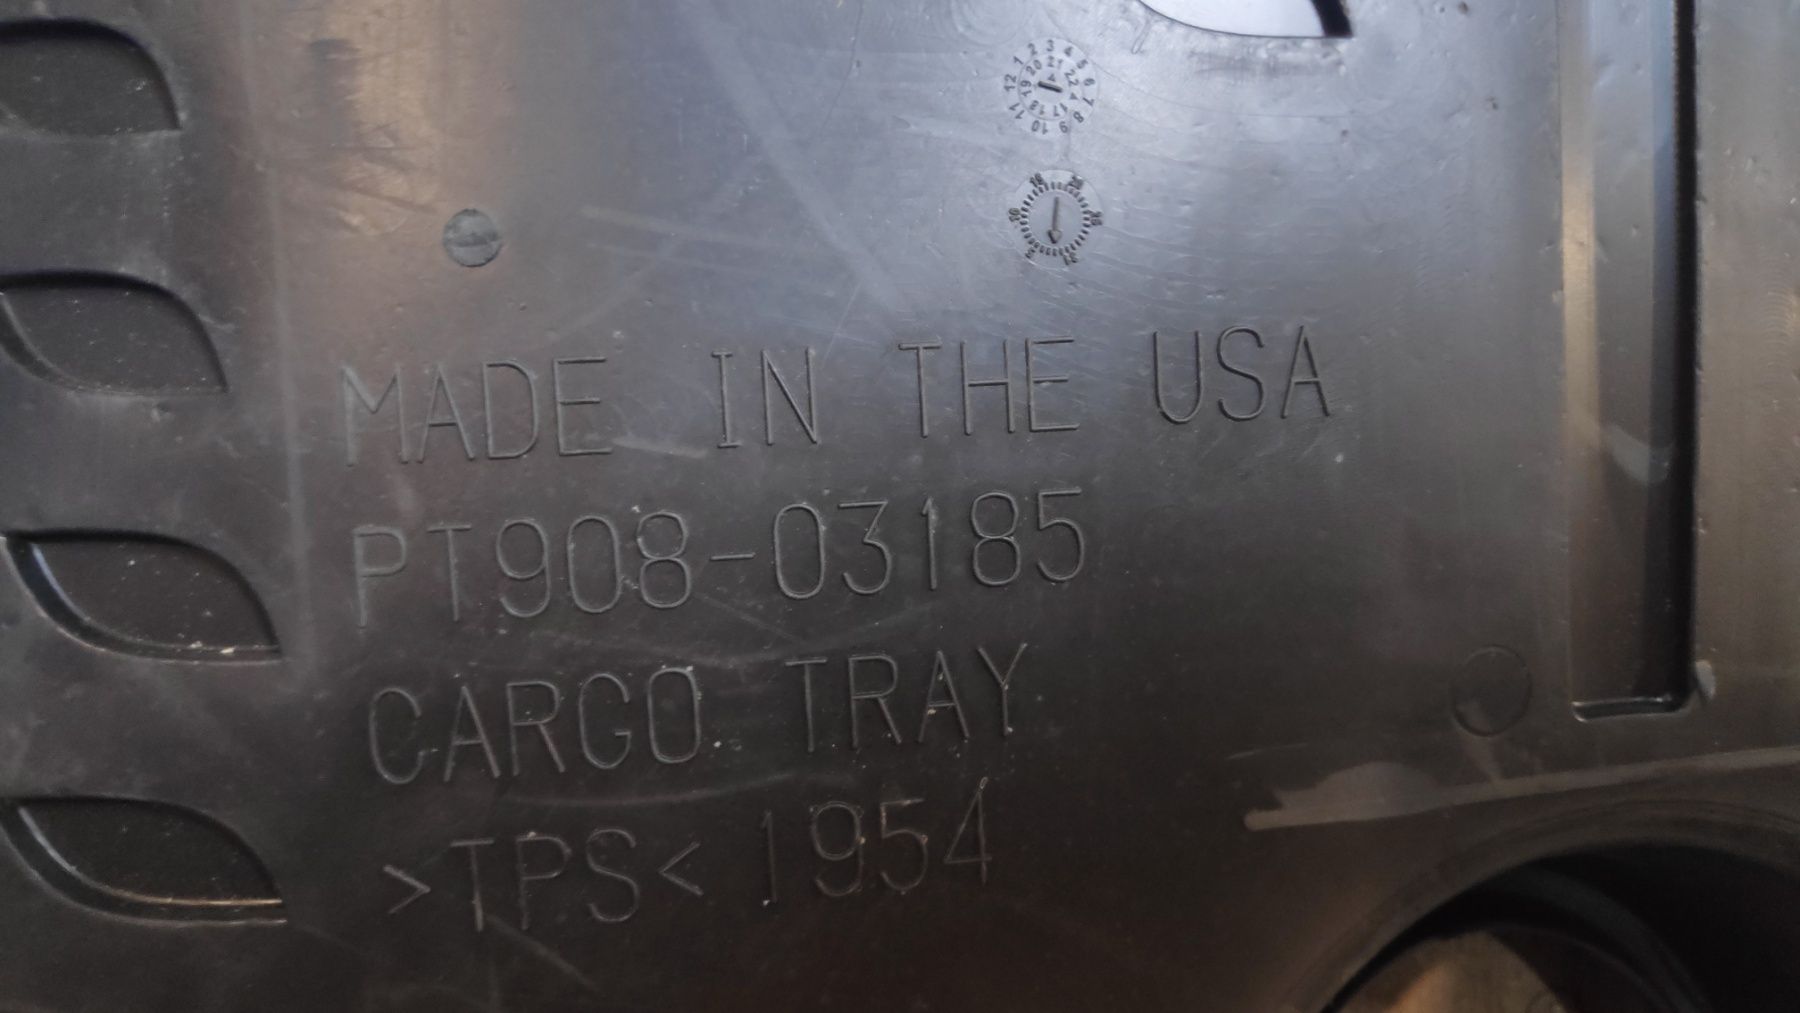 Toyota Camry Коврик в багажник. PT908-03185. Made in the USA